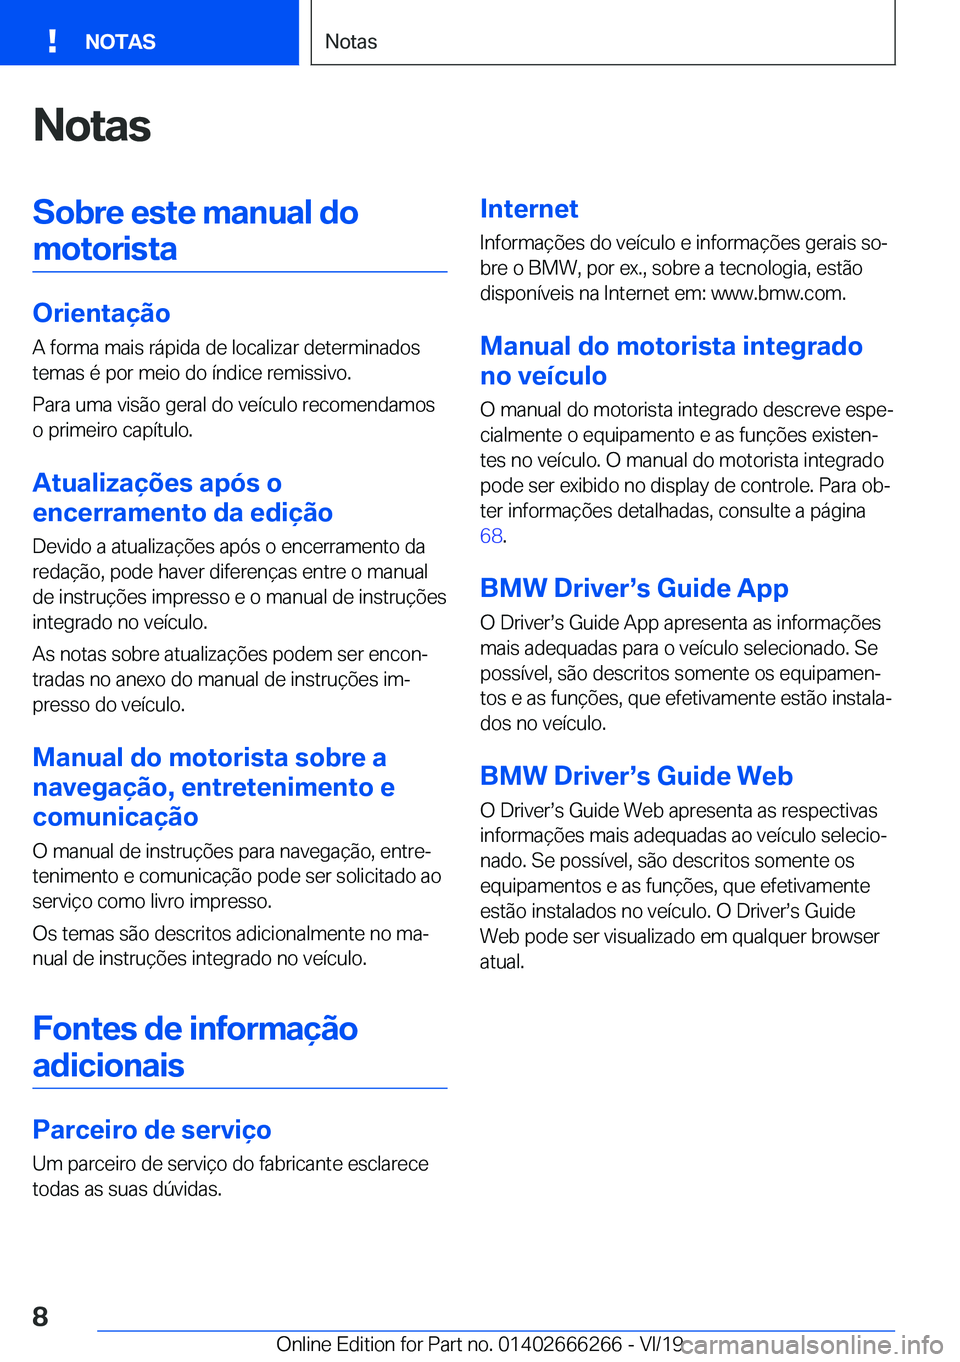 BMW 2 SERIES COUPE 2020  Manual do condutor (in Portuguese) �N�o�t�a�s�S�o�b�r�e��e�s�t�e��m�a�n�u�a�l��d�o�m�o�t�o�r�i�s�t�a
�O�r�i�e�n�t�a�